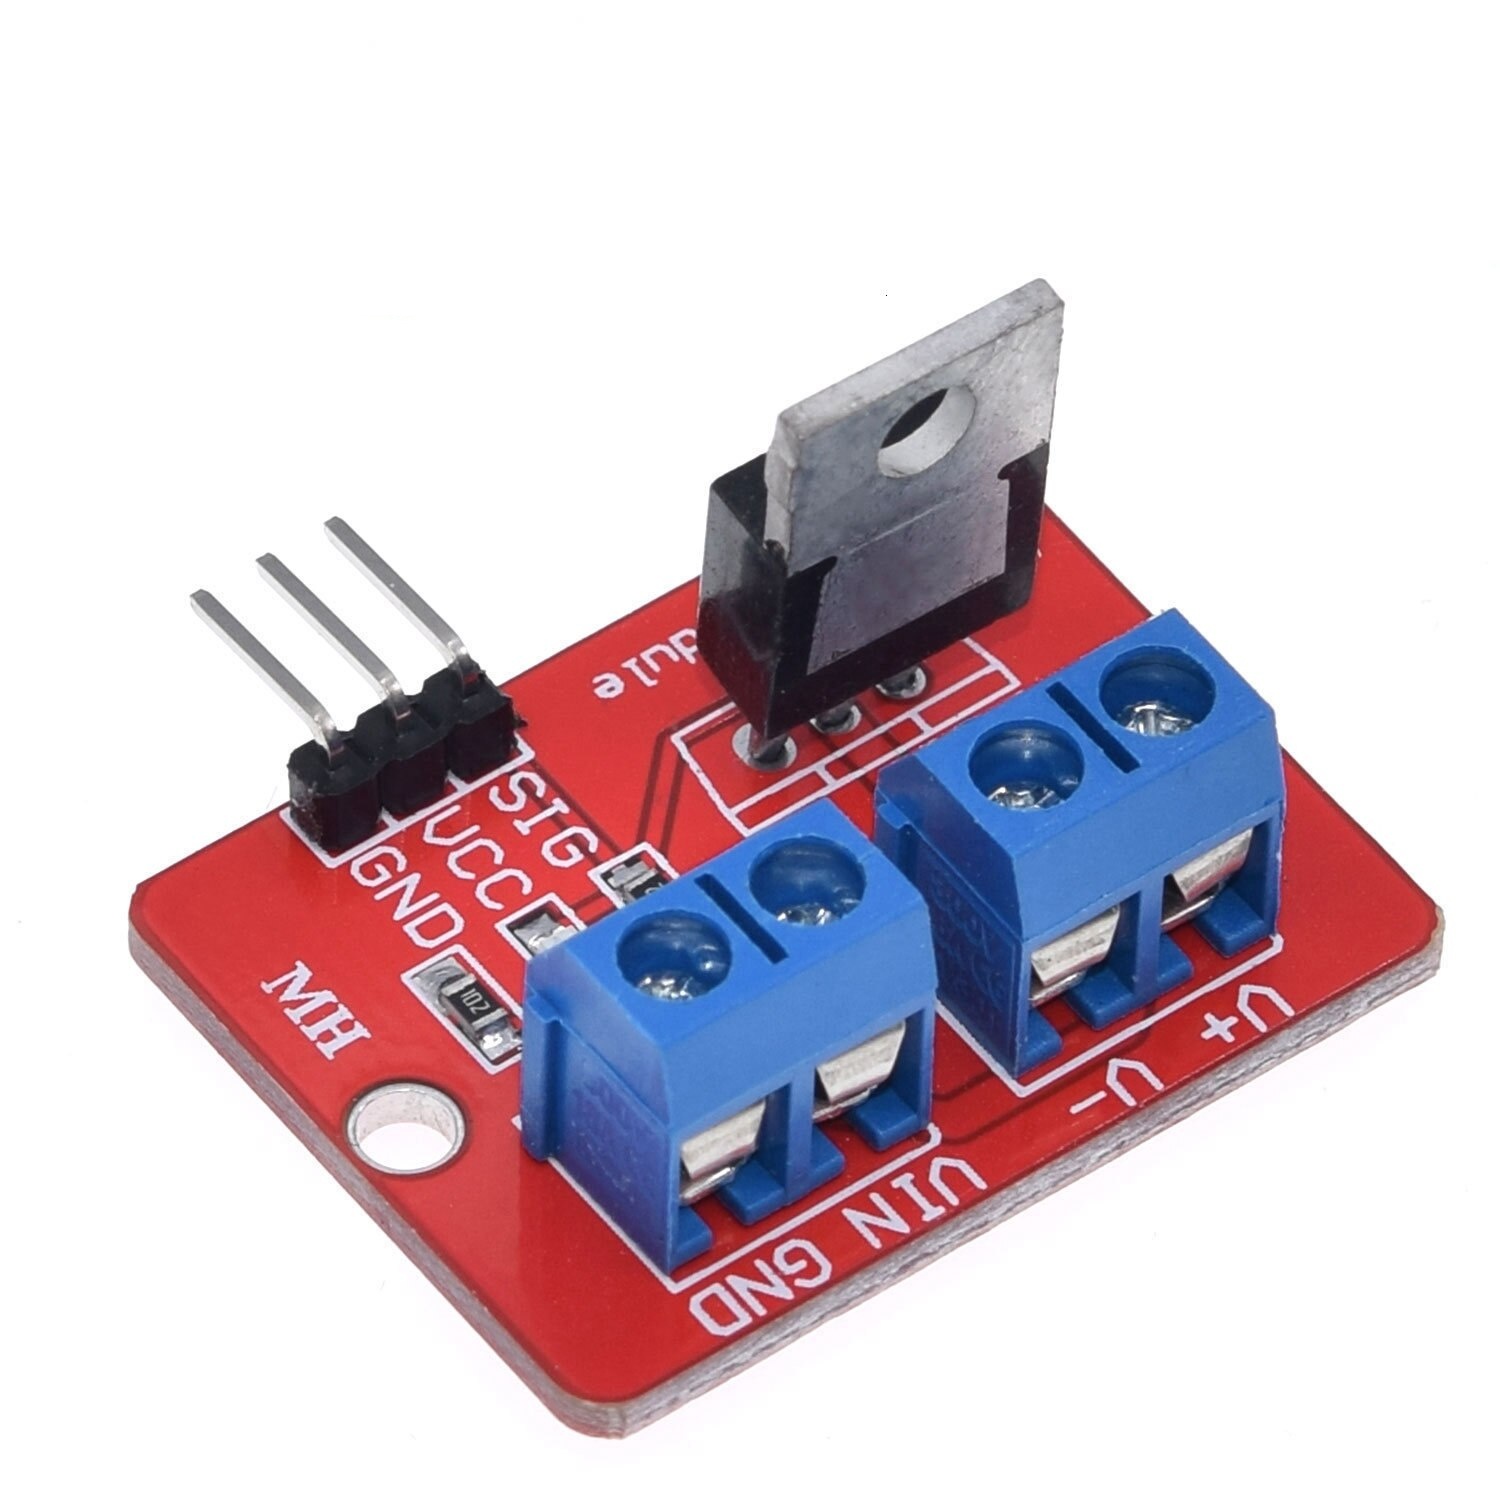 0-24V Top Mosfet Button IRF520 MOS Driver Module For Arduino MCU ARM Raspberry pi